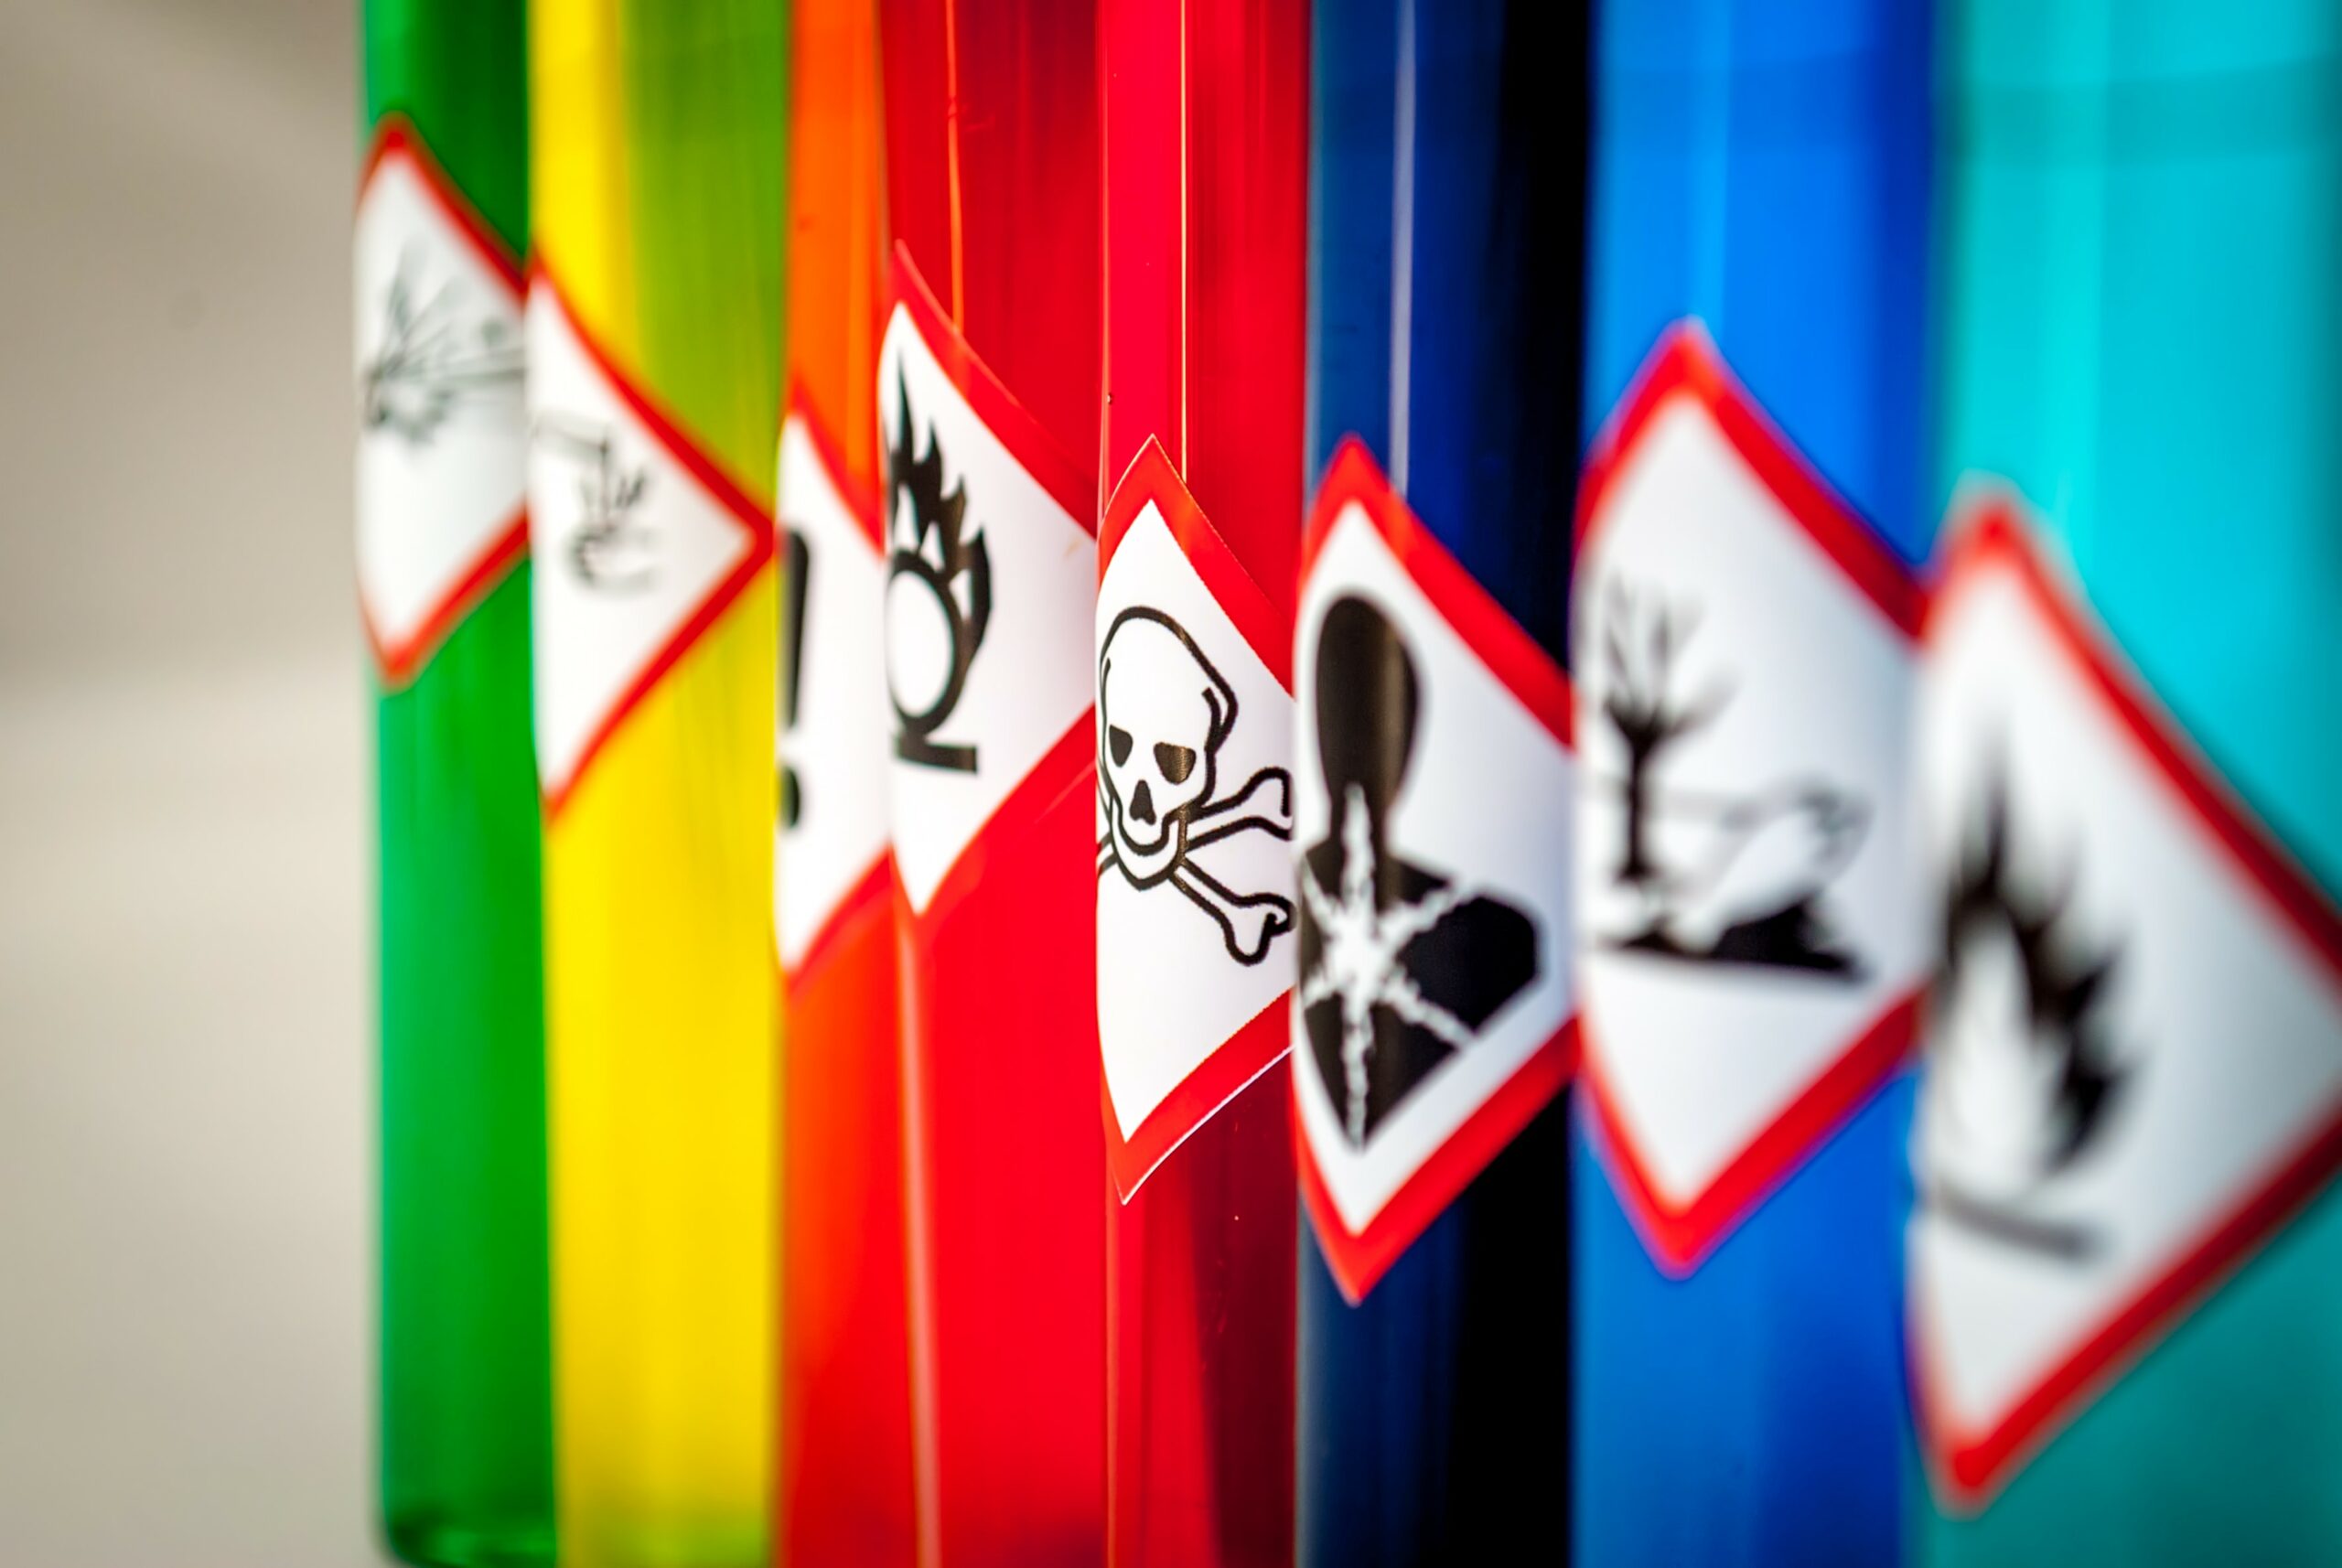 hazard-toxic-corrosive